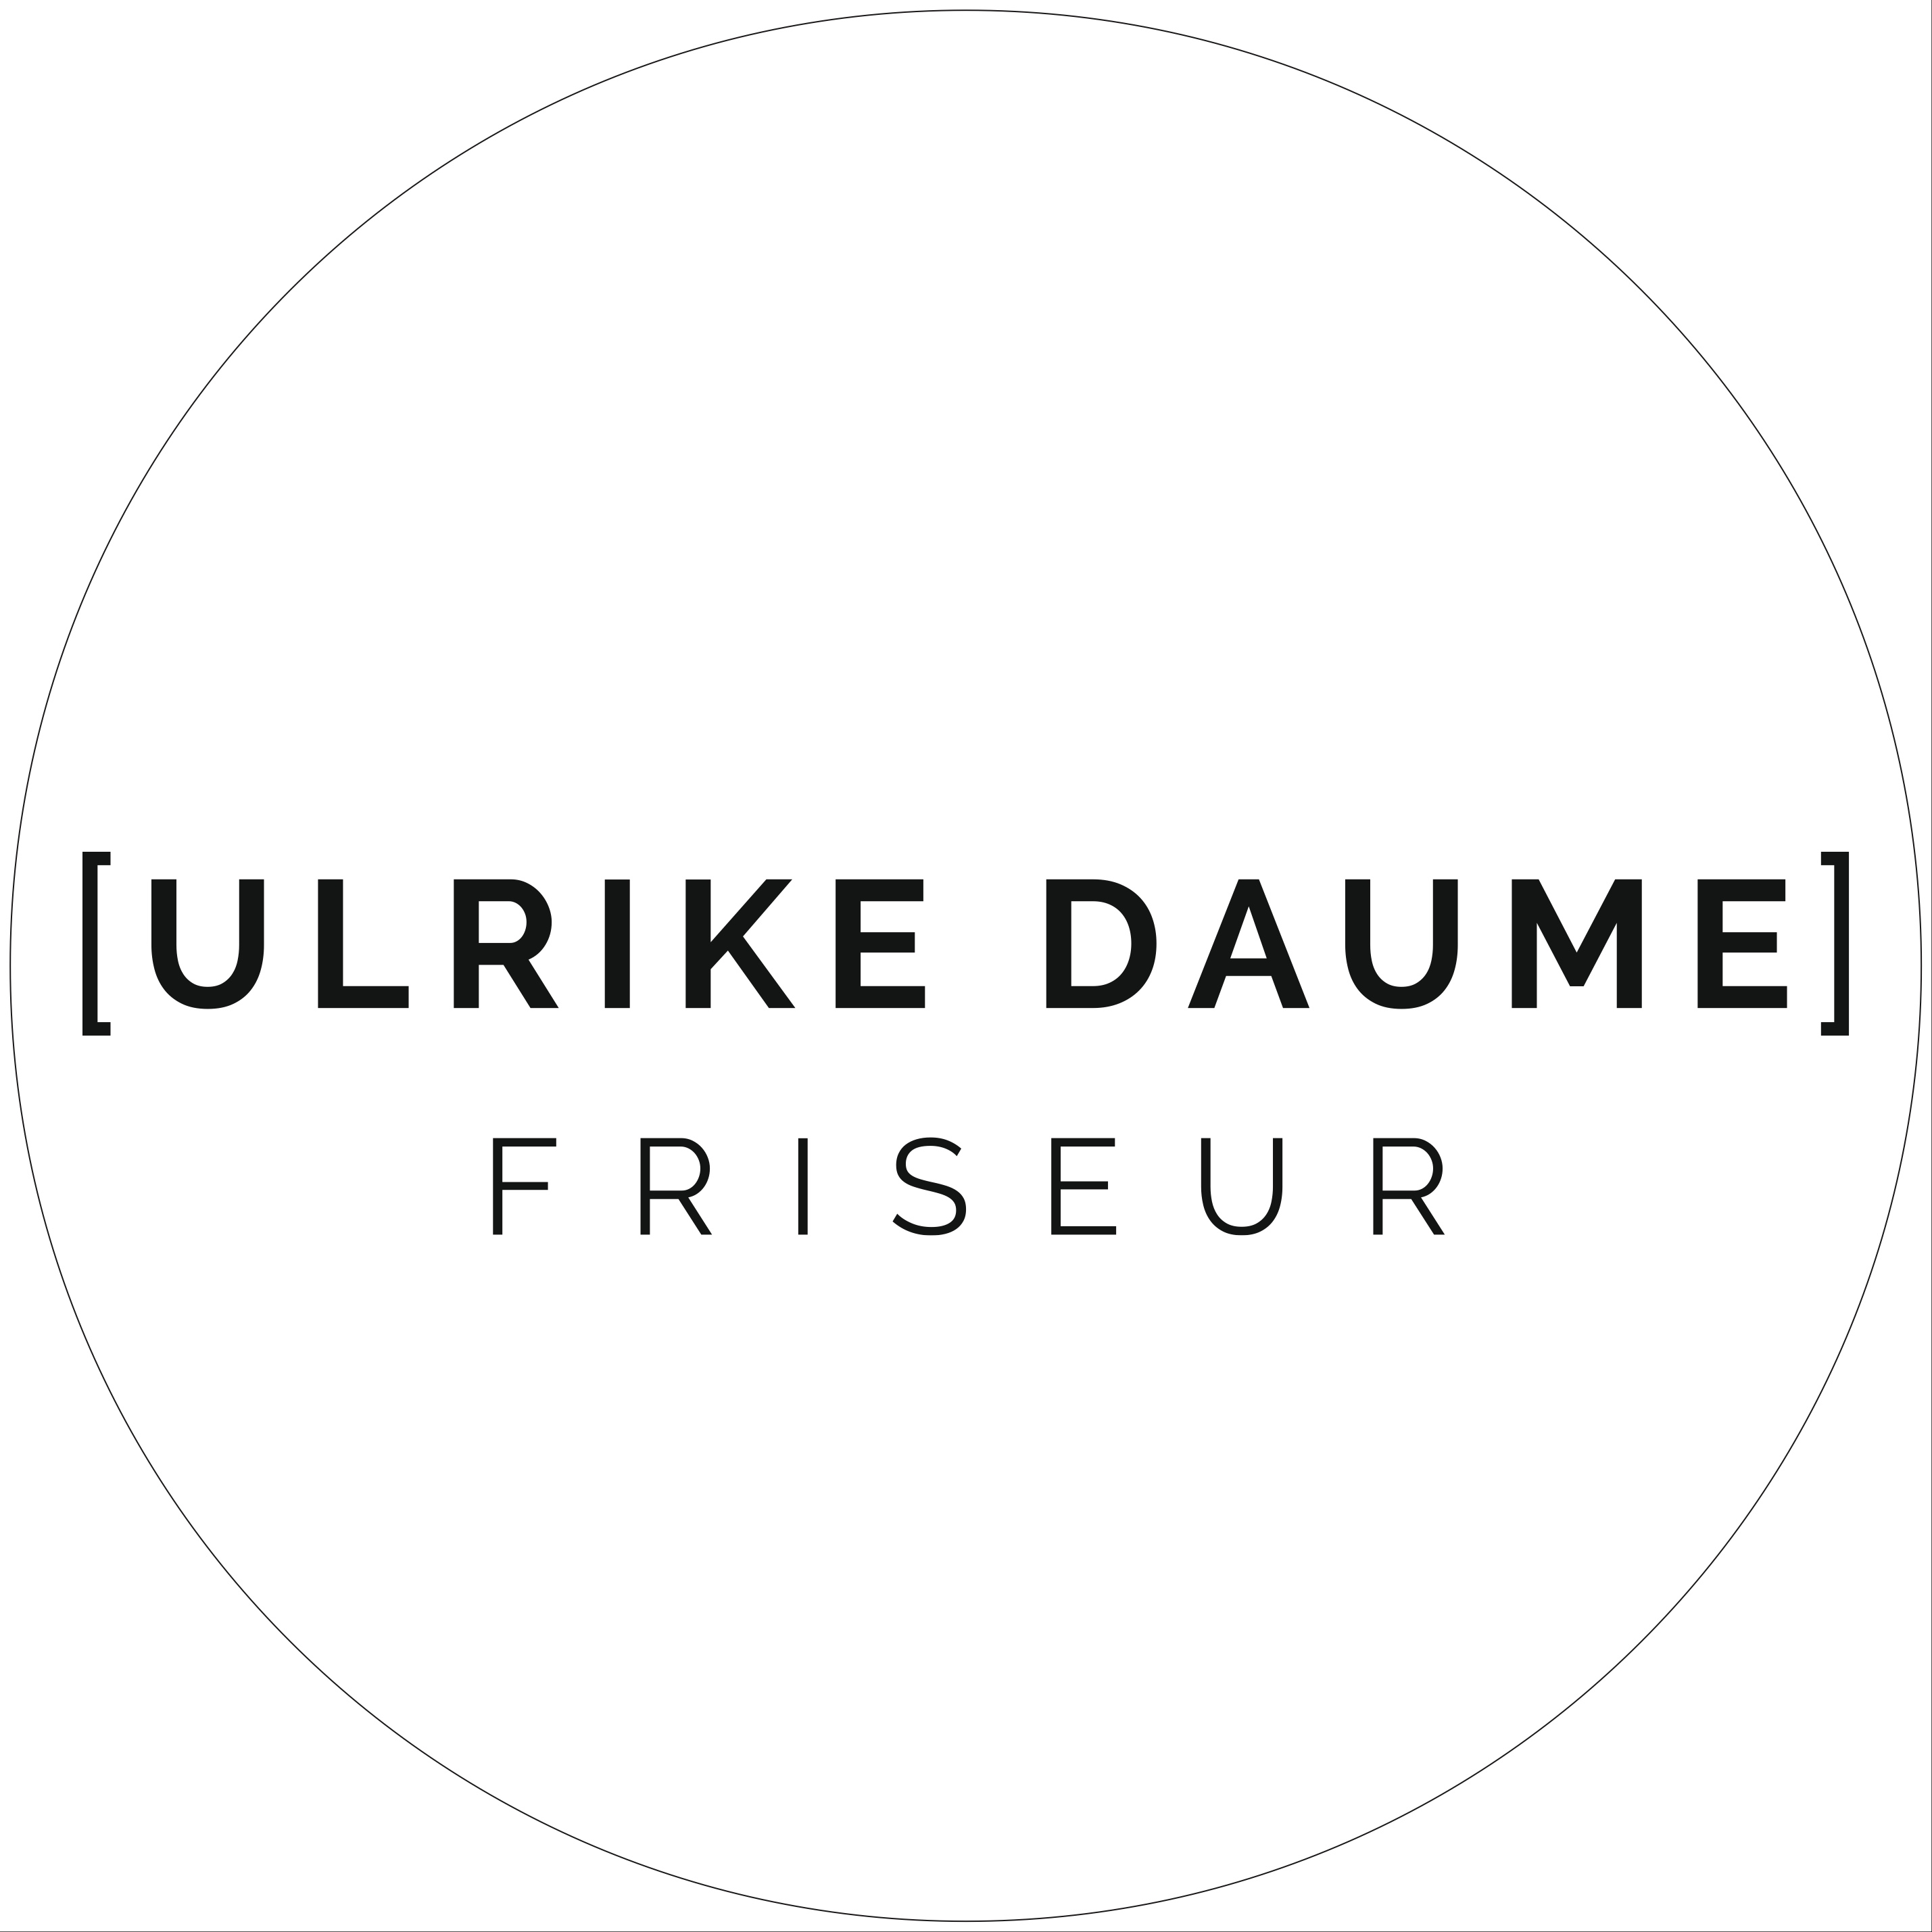 Ulrike Daume - Friseur